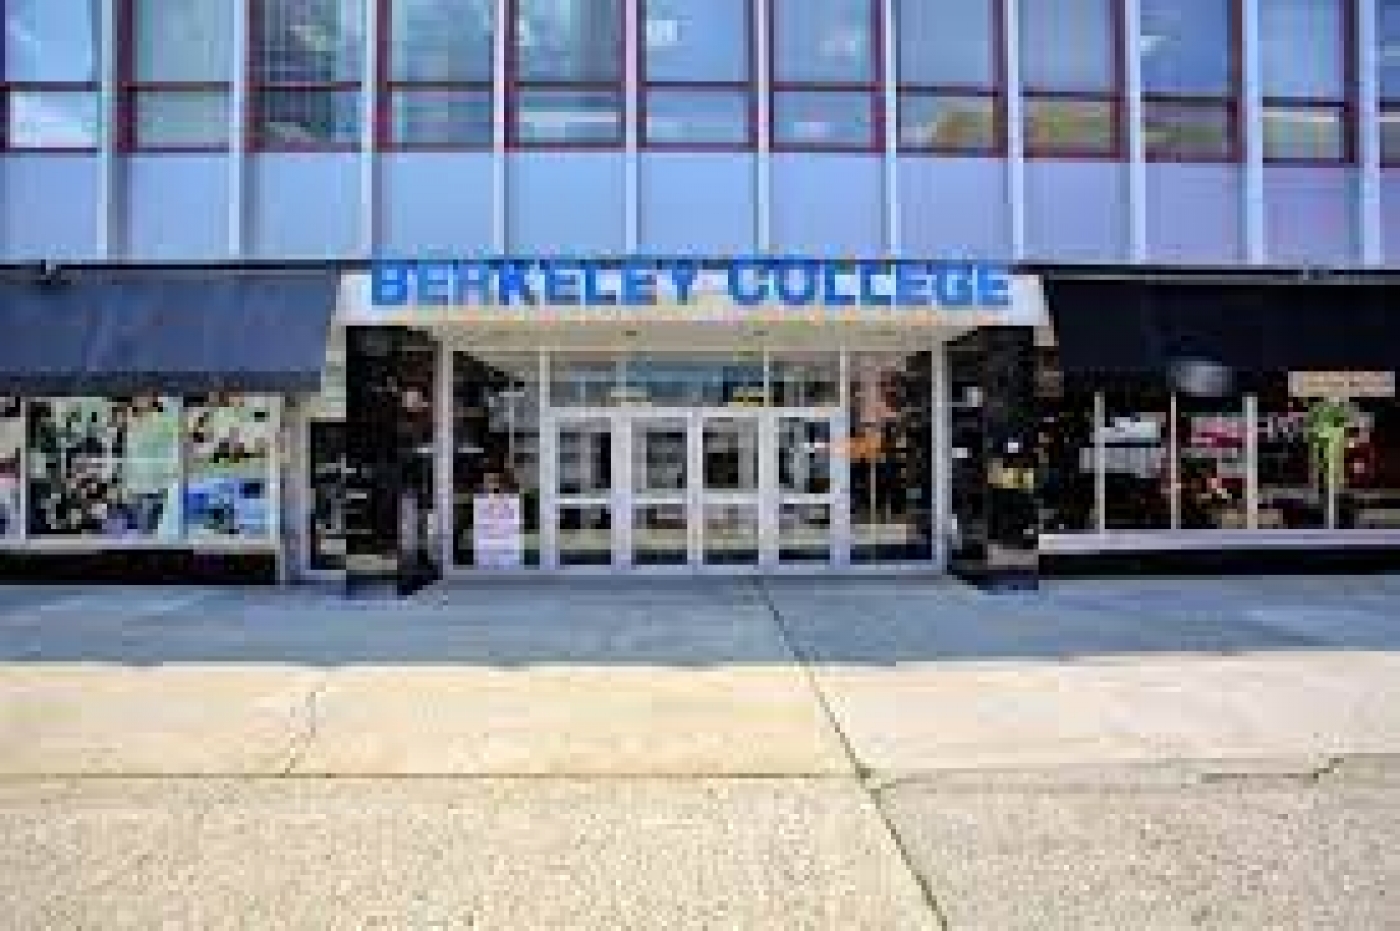 Berkeley College - New York City Midtown Campus